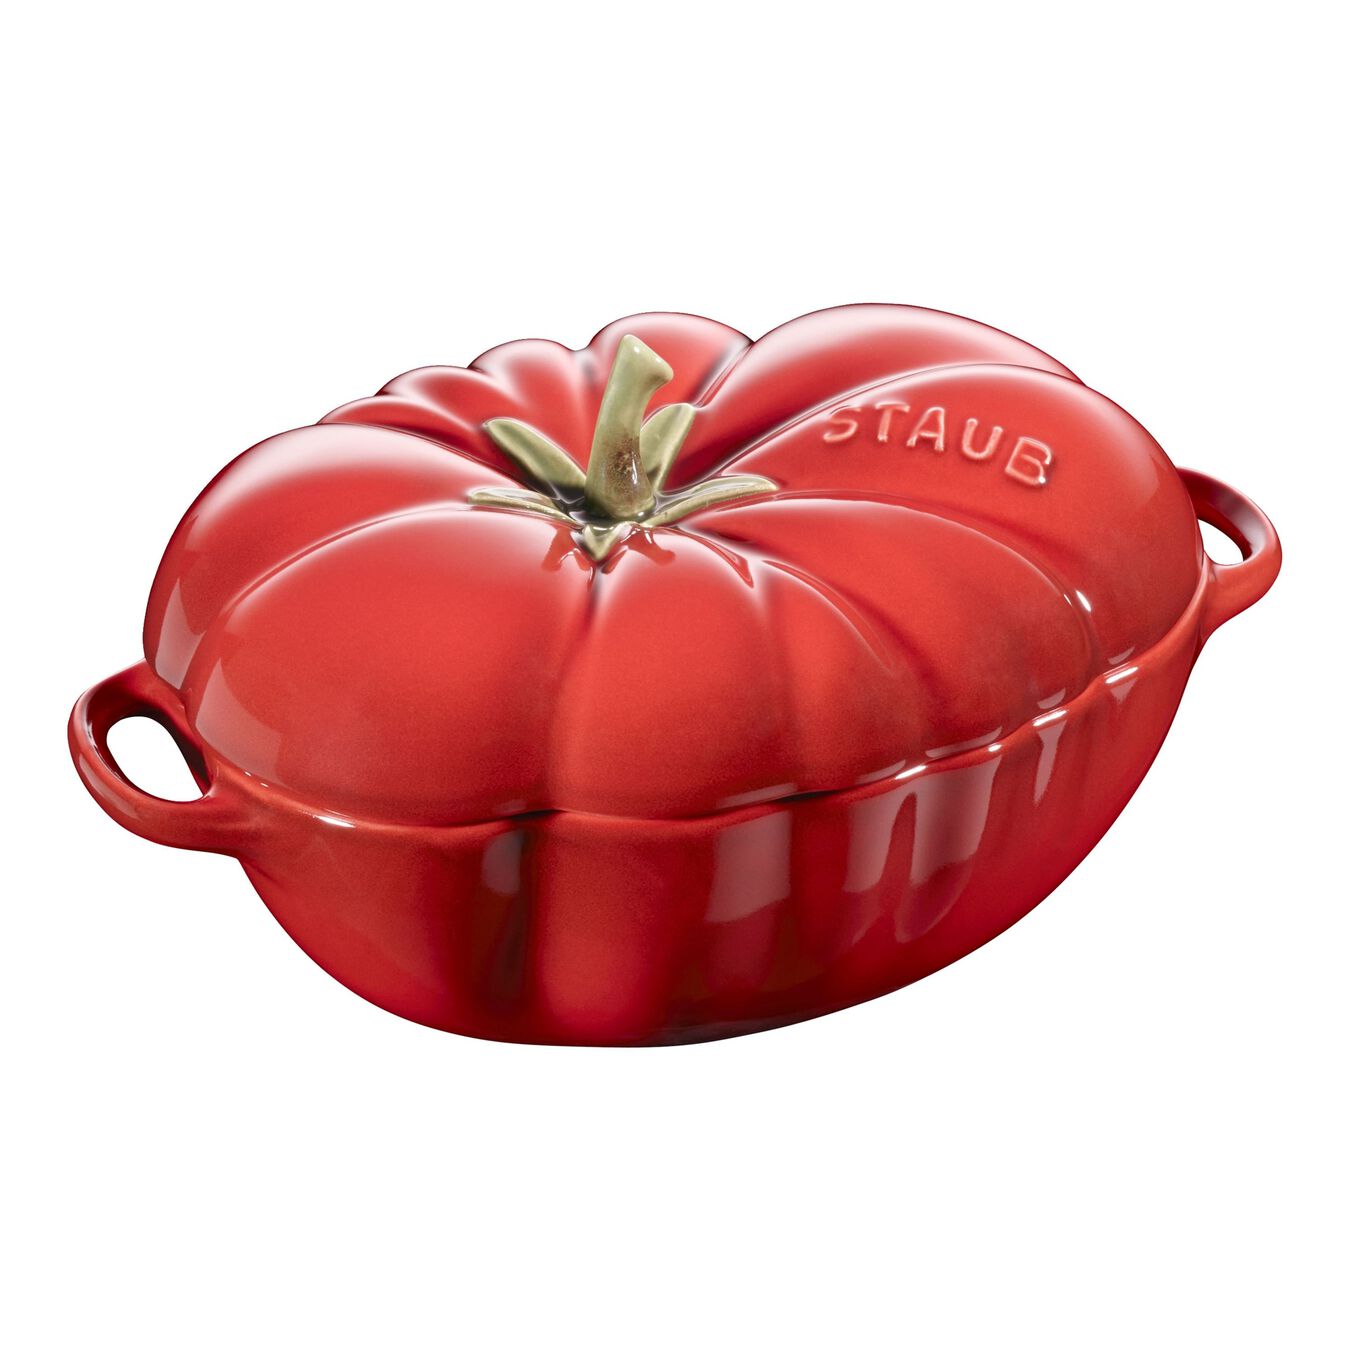 Cocotte 16 cm, Tomat, Kirsebærrød, Keramisk,,large 1